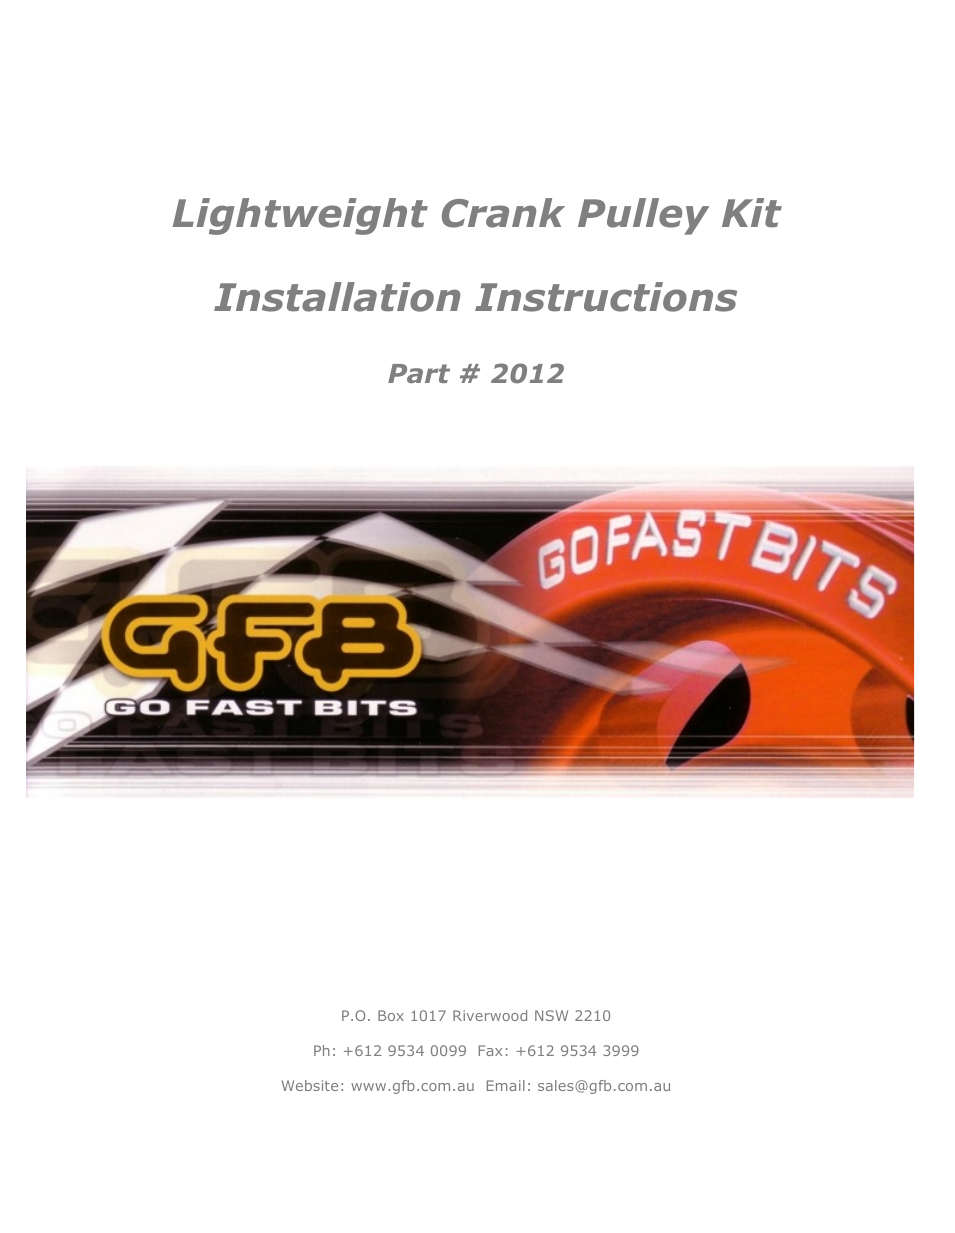 Lightweight Crank Pulley Kit (part 2012)